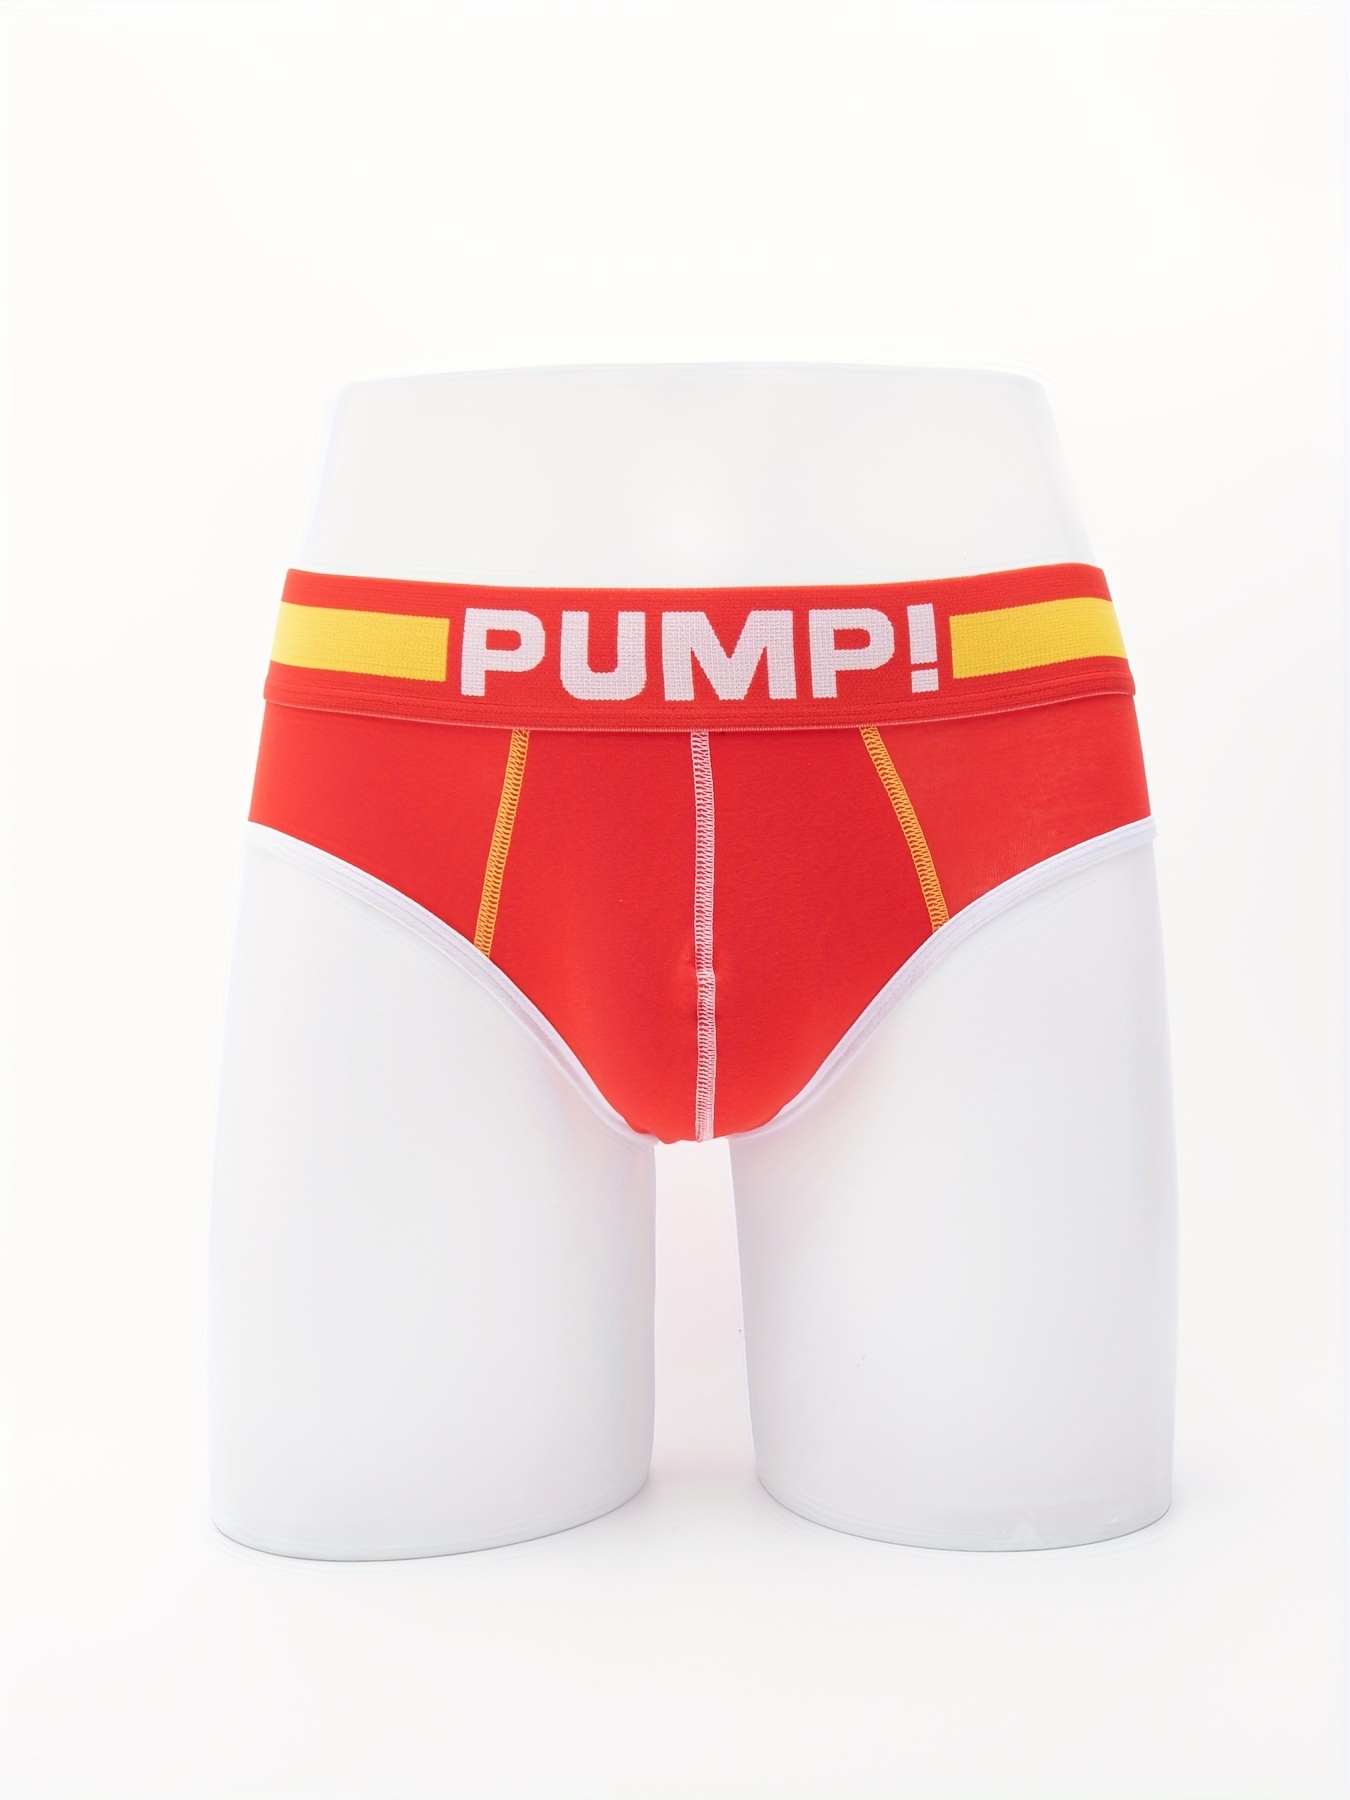 PUMP Flash Brief - Mens Sporty Red Breathable Micro Mesh Briefs